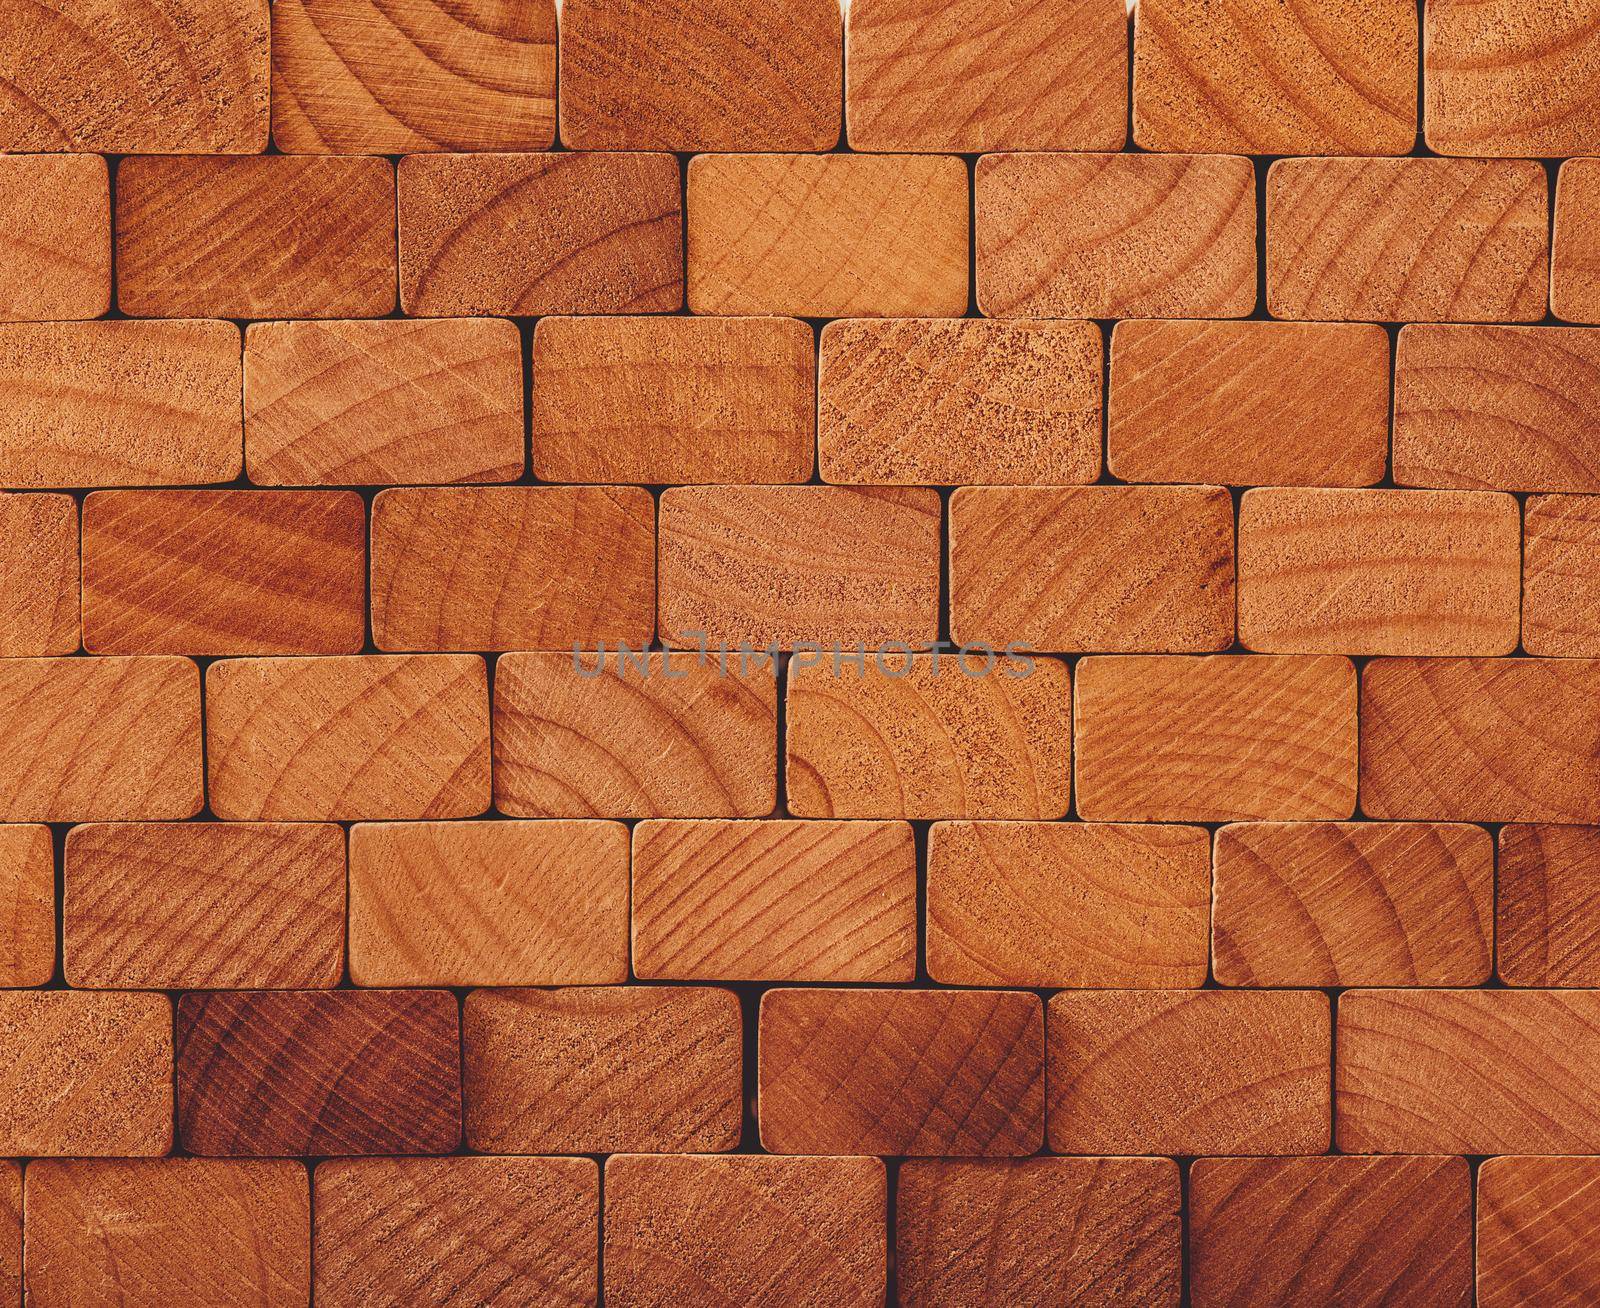 Wooden geometric surface by alexAleksei